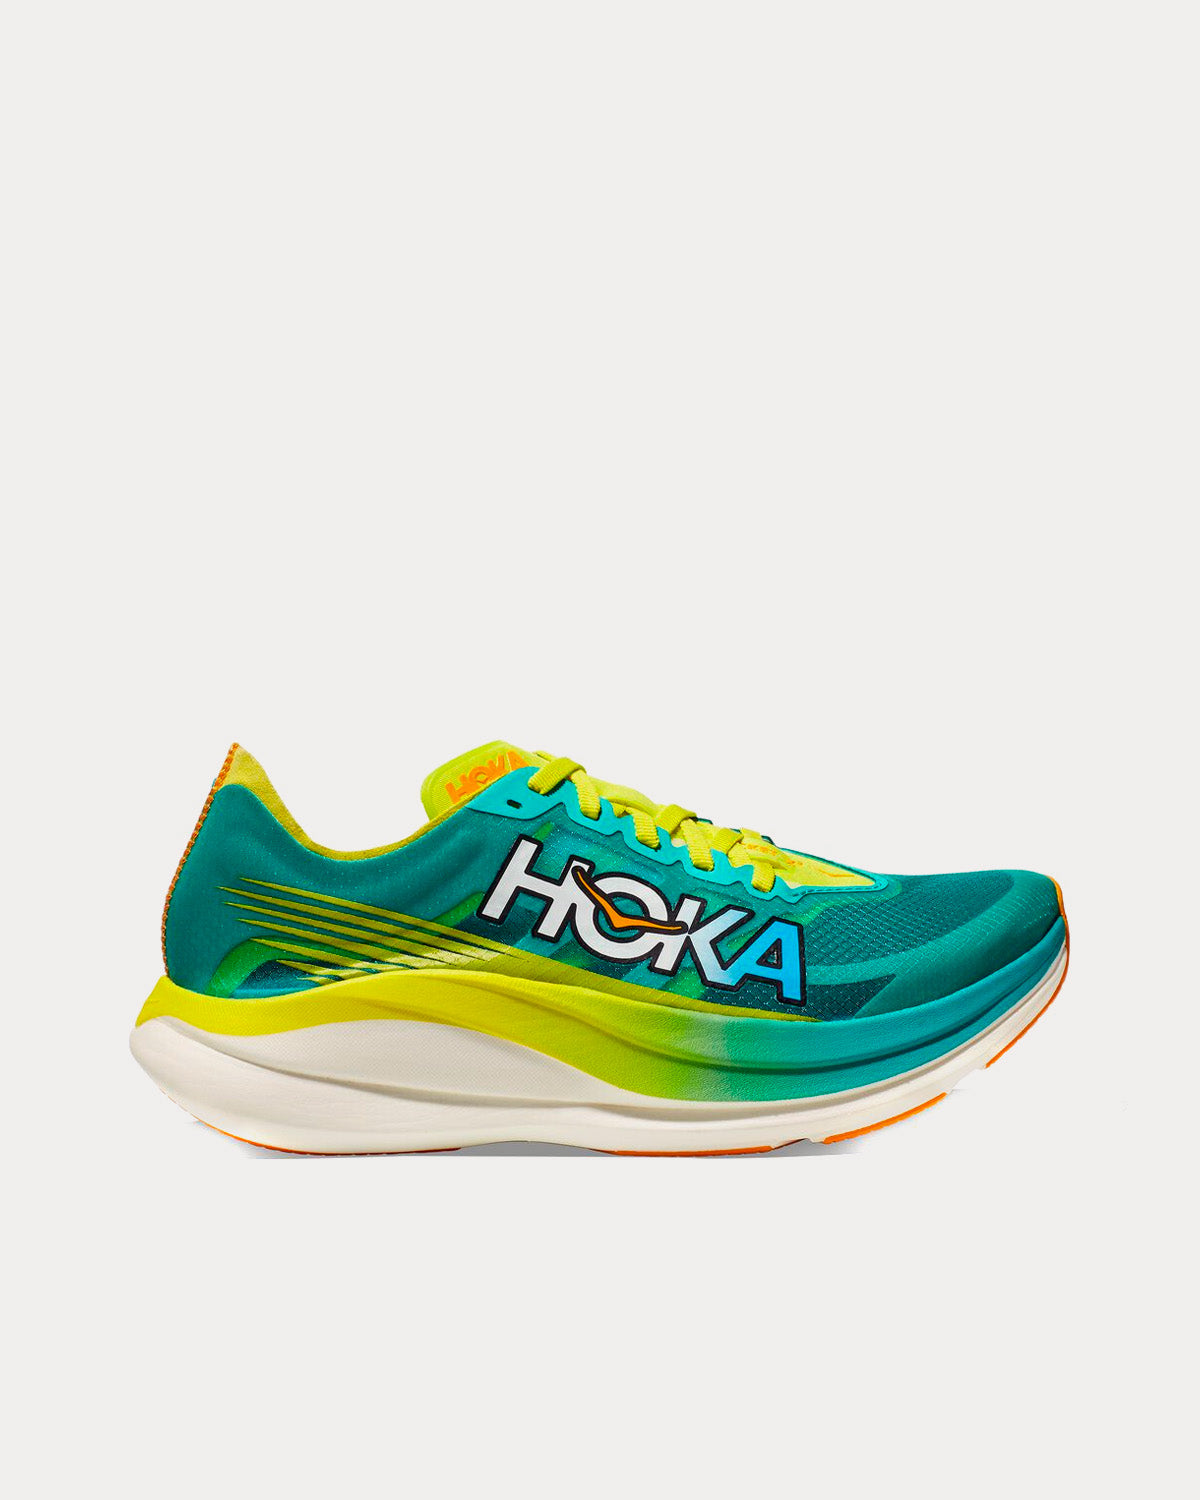 HOKA Men's Rocket X 2 Running Shoes | Dick's Sporting Goods